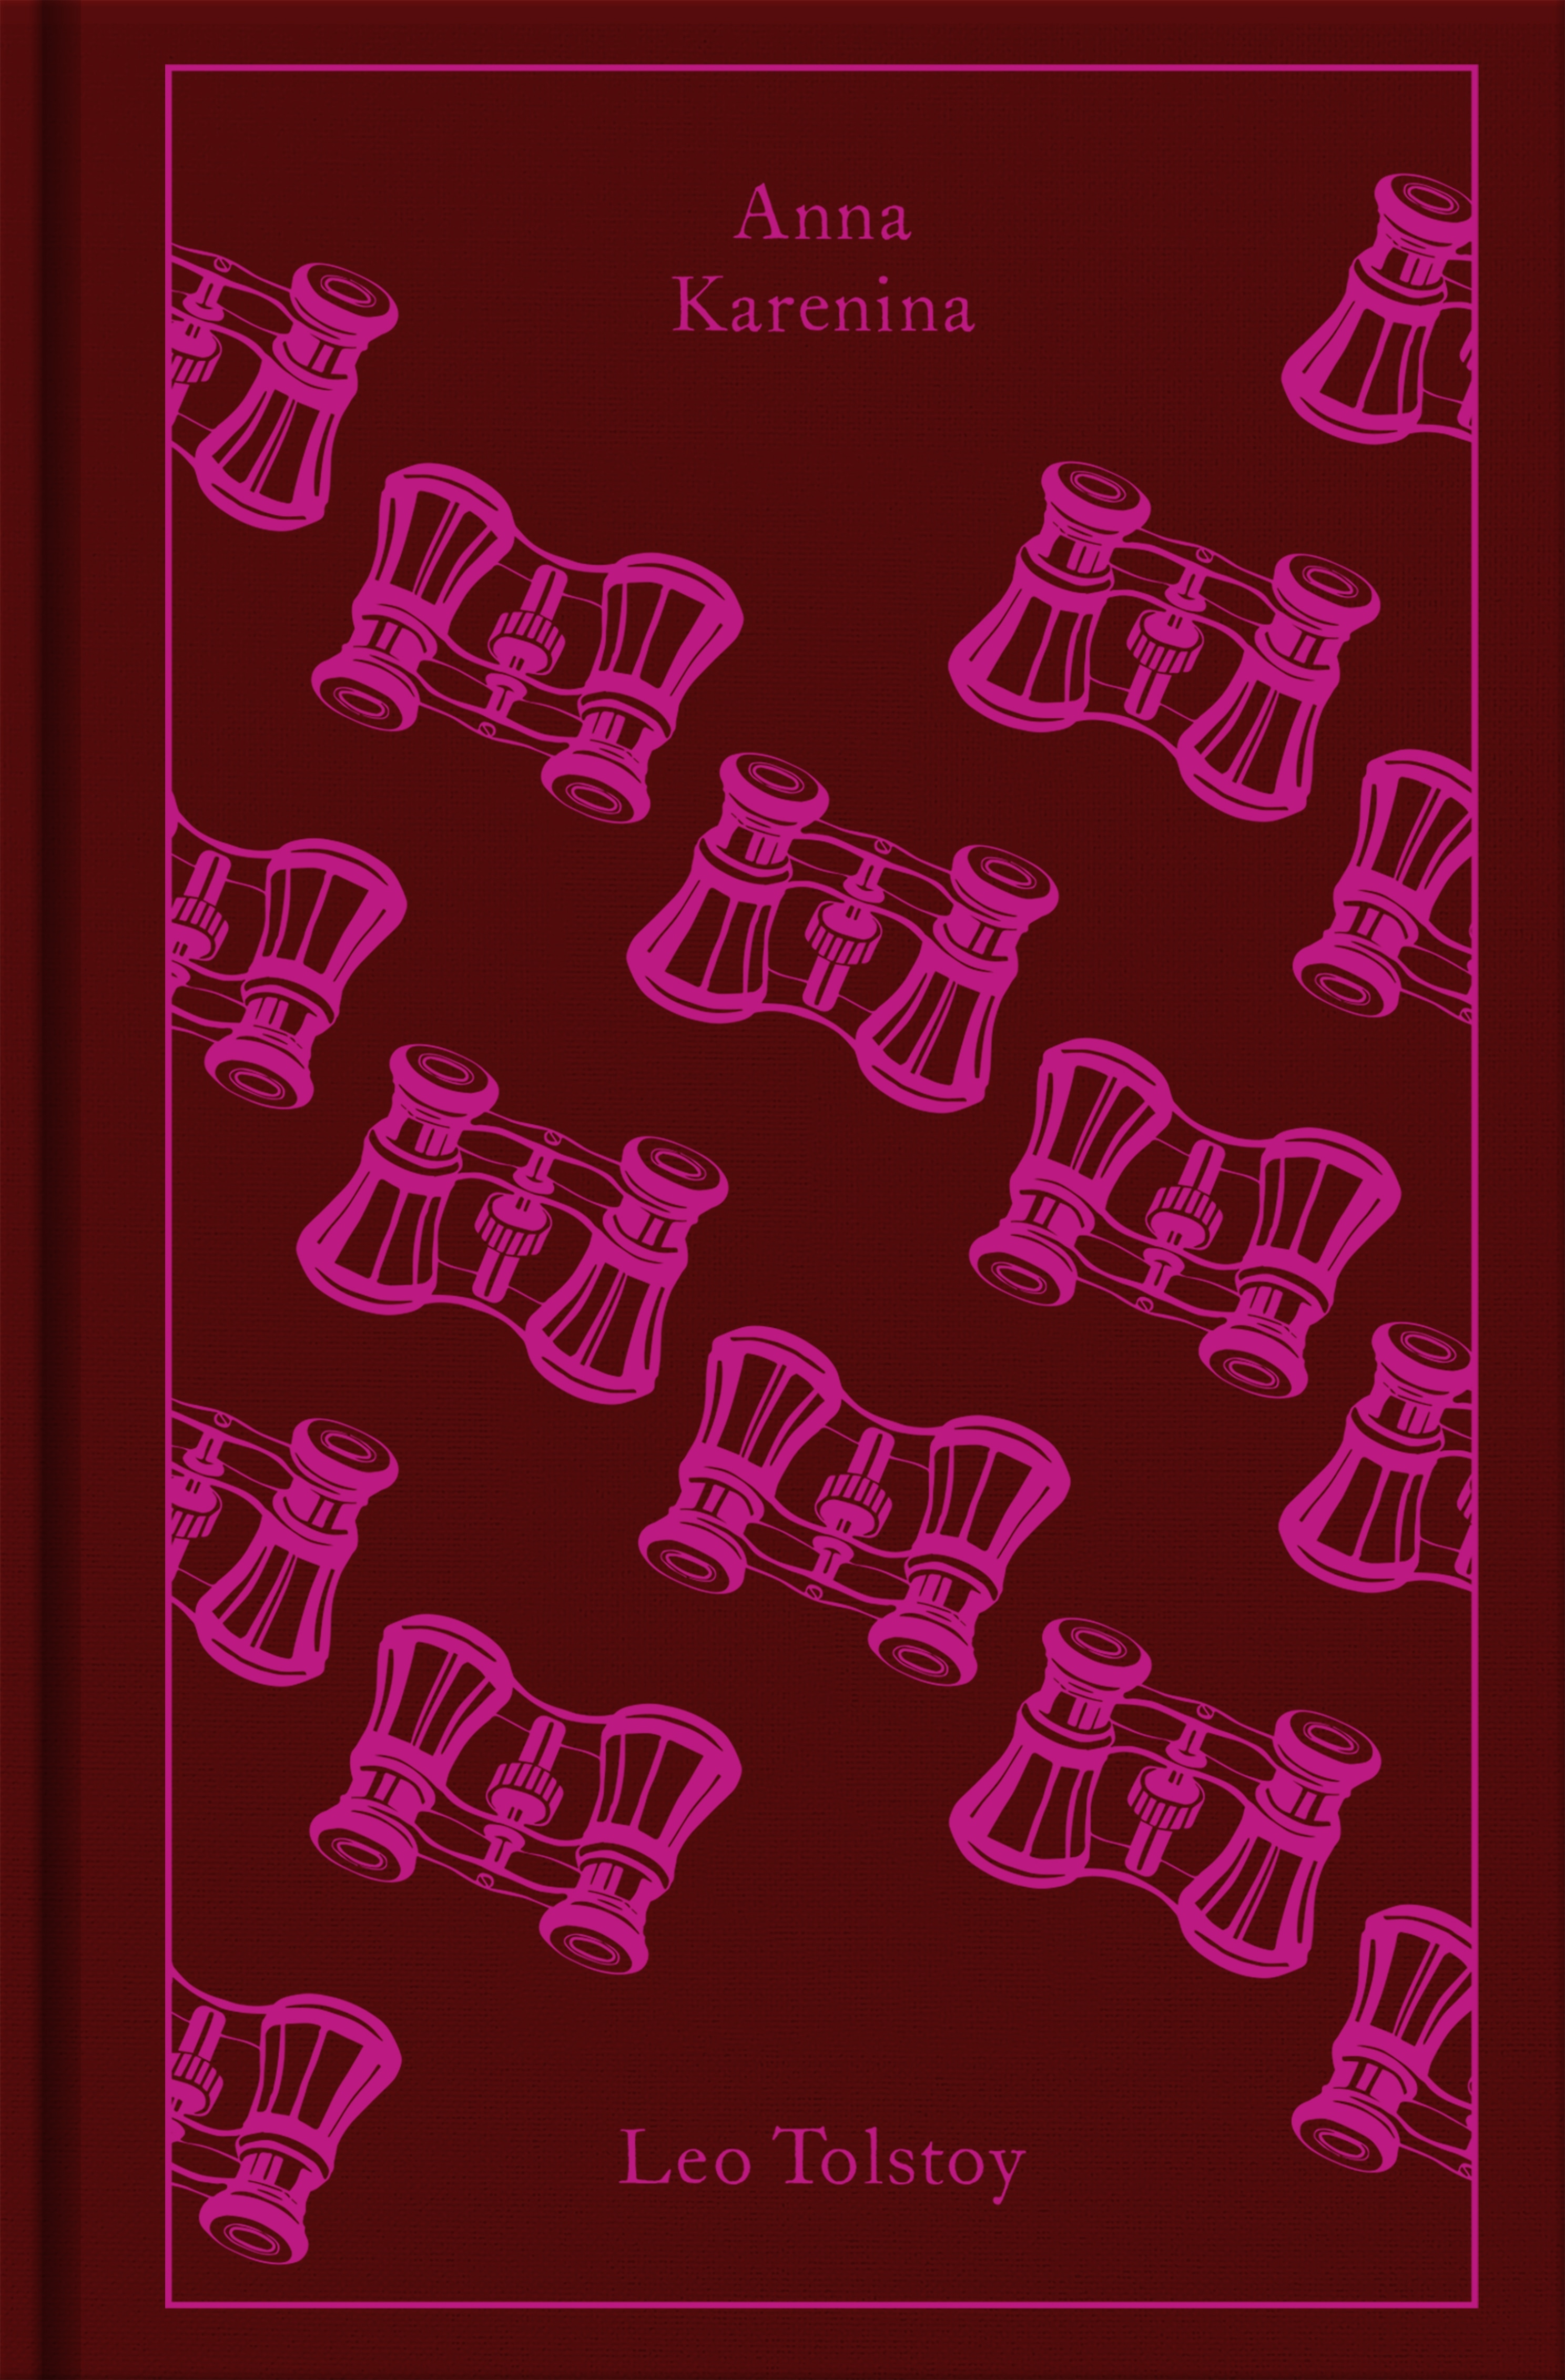 Book “Anna Karenina” by Leo Tolstoy, Richard Pevear — November 28, 2013